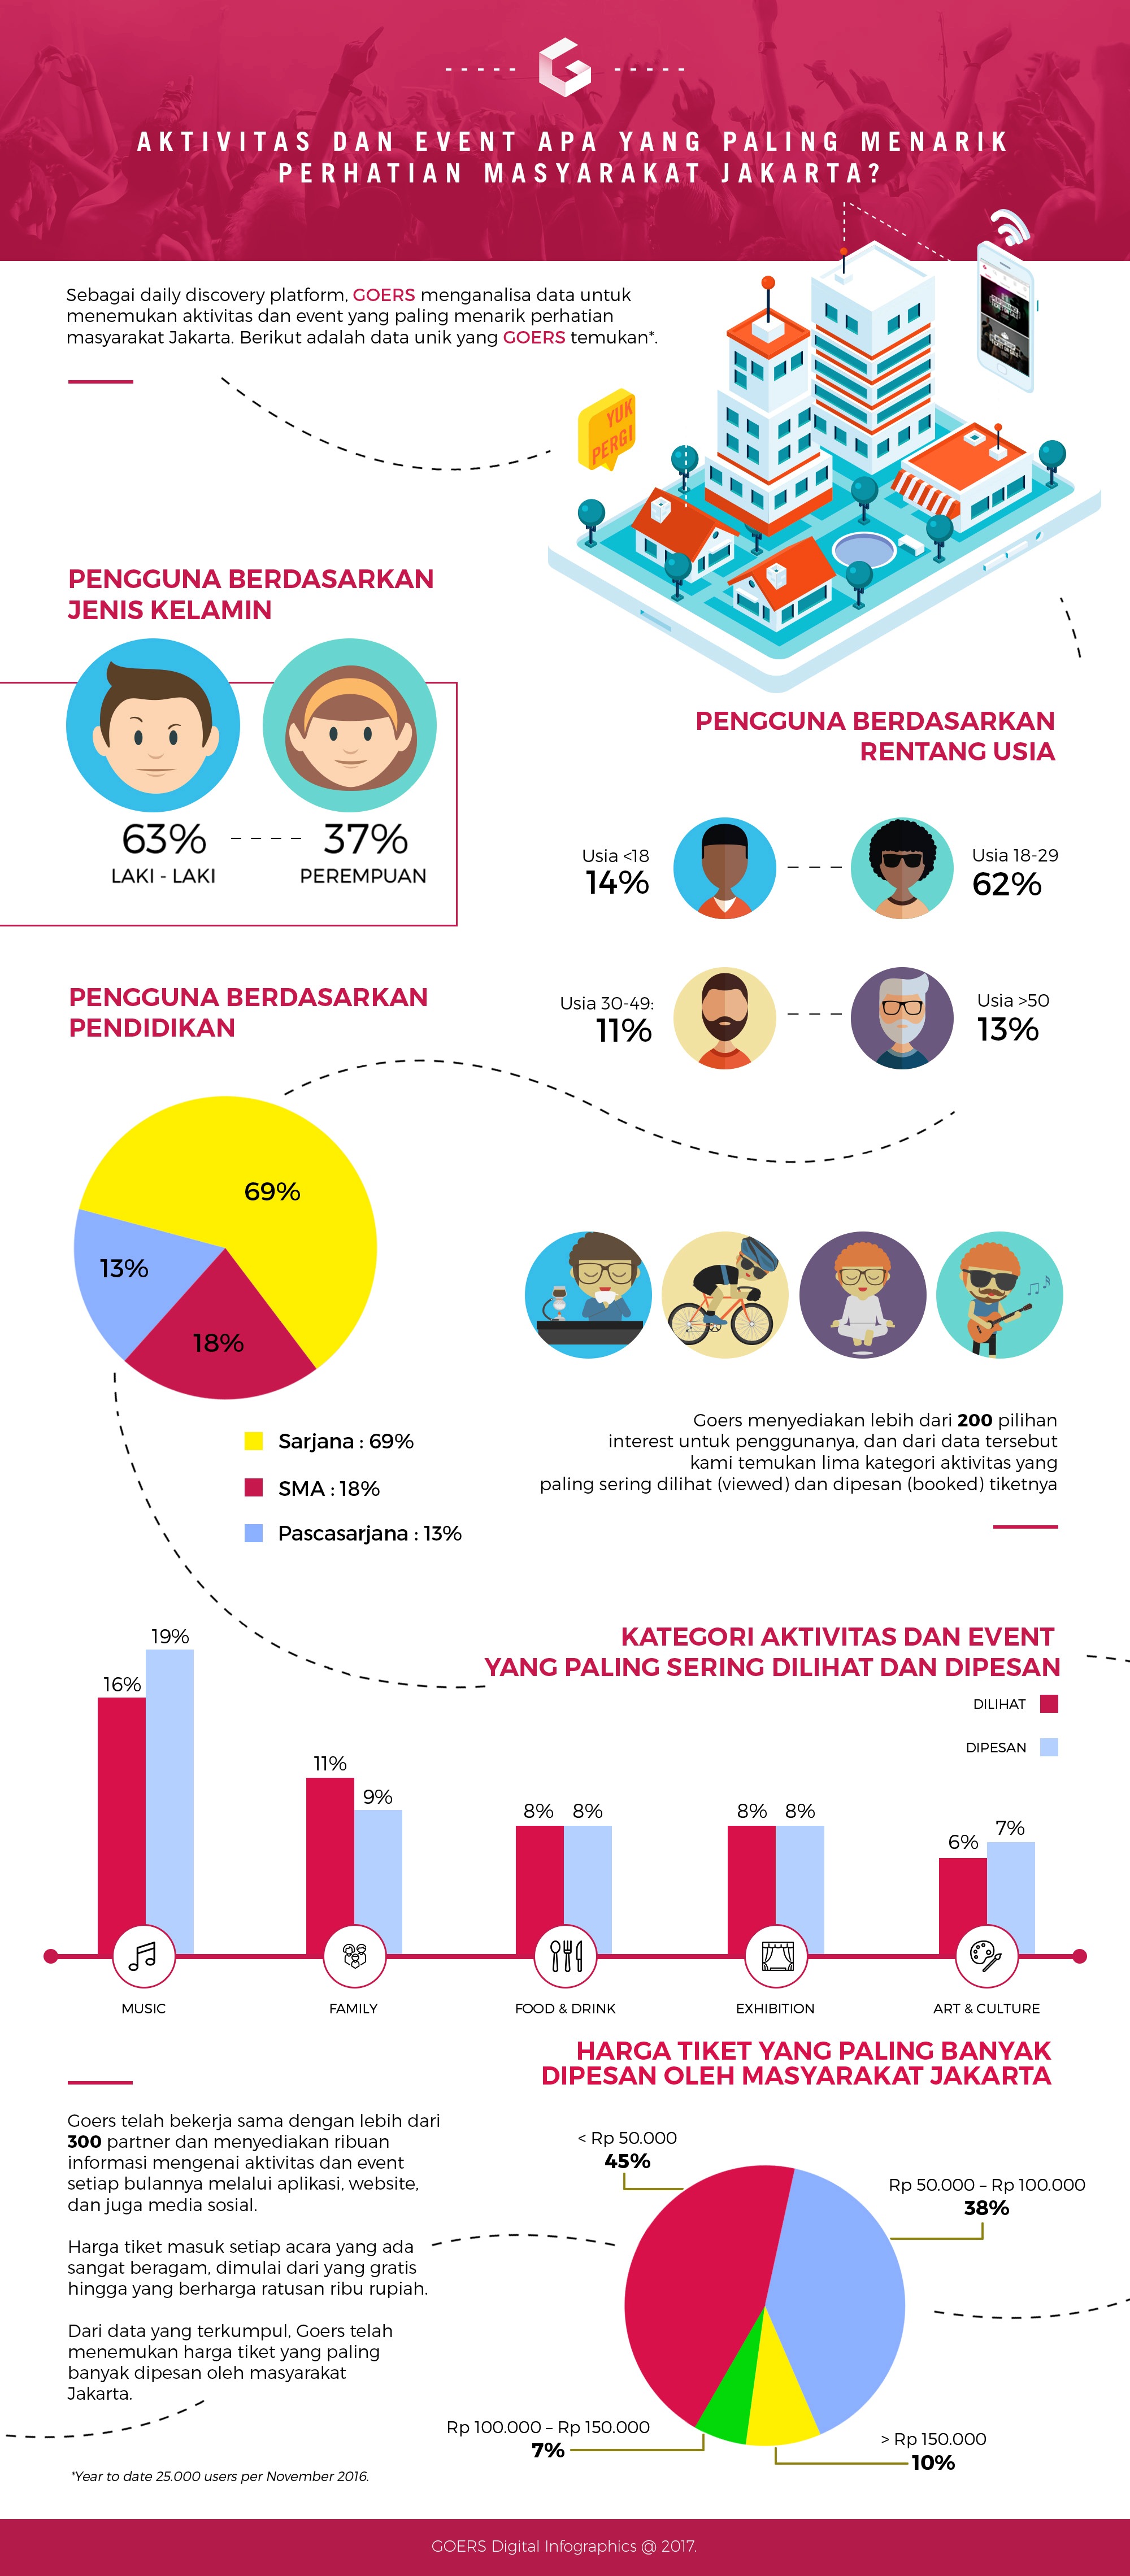 Jakarta Most Interesting Event Infographic by aplikasi goers marketingcoid